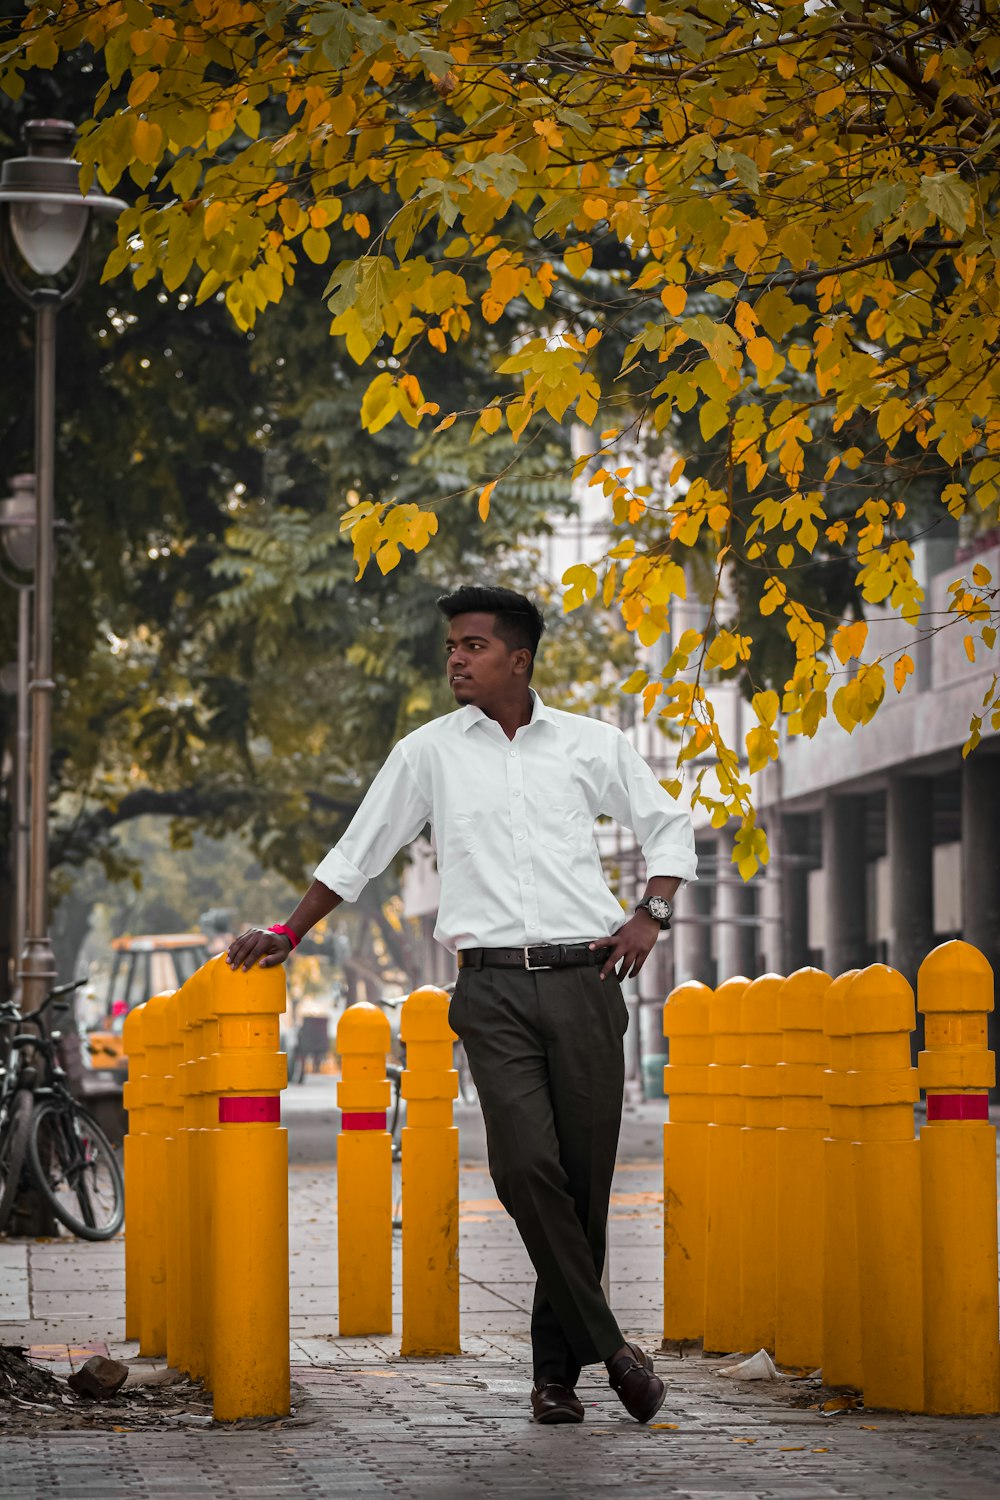 man in white dress shirt and black pants standing near yellow plastic trash bins during daytime